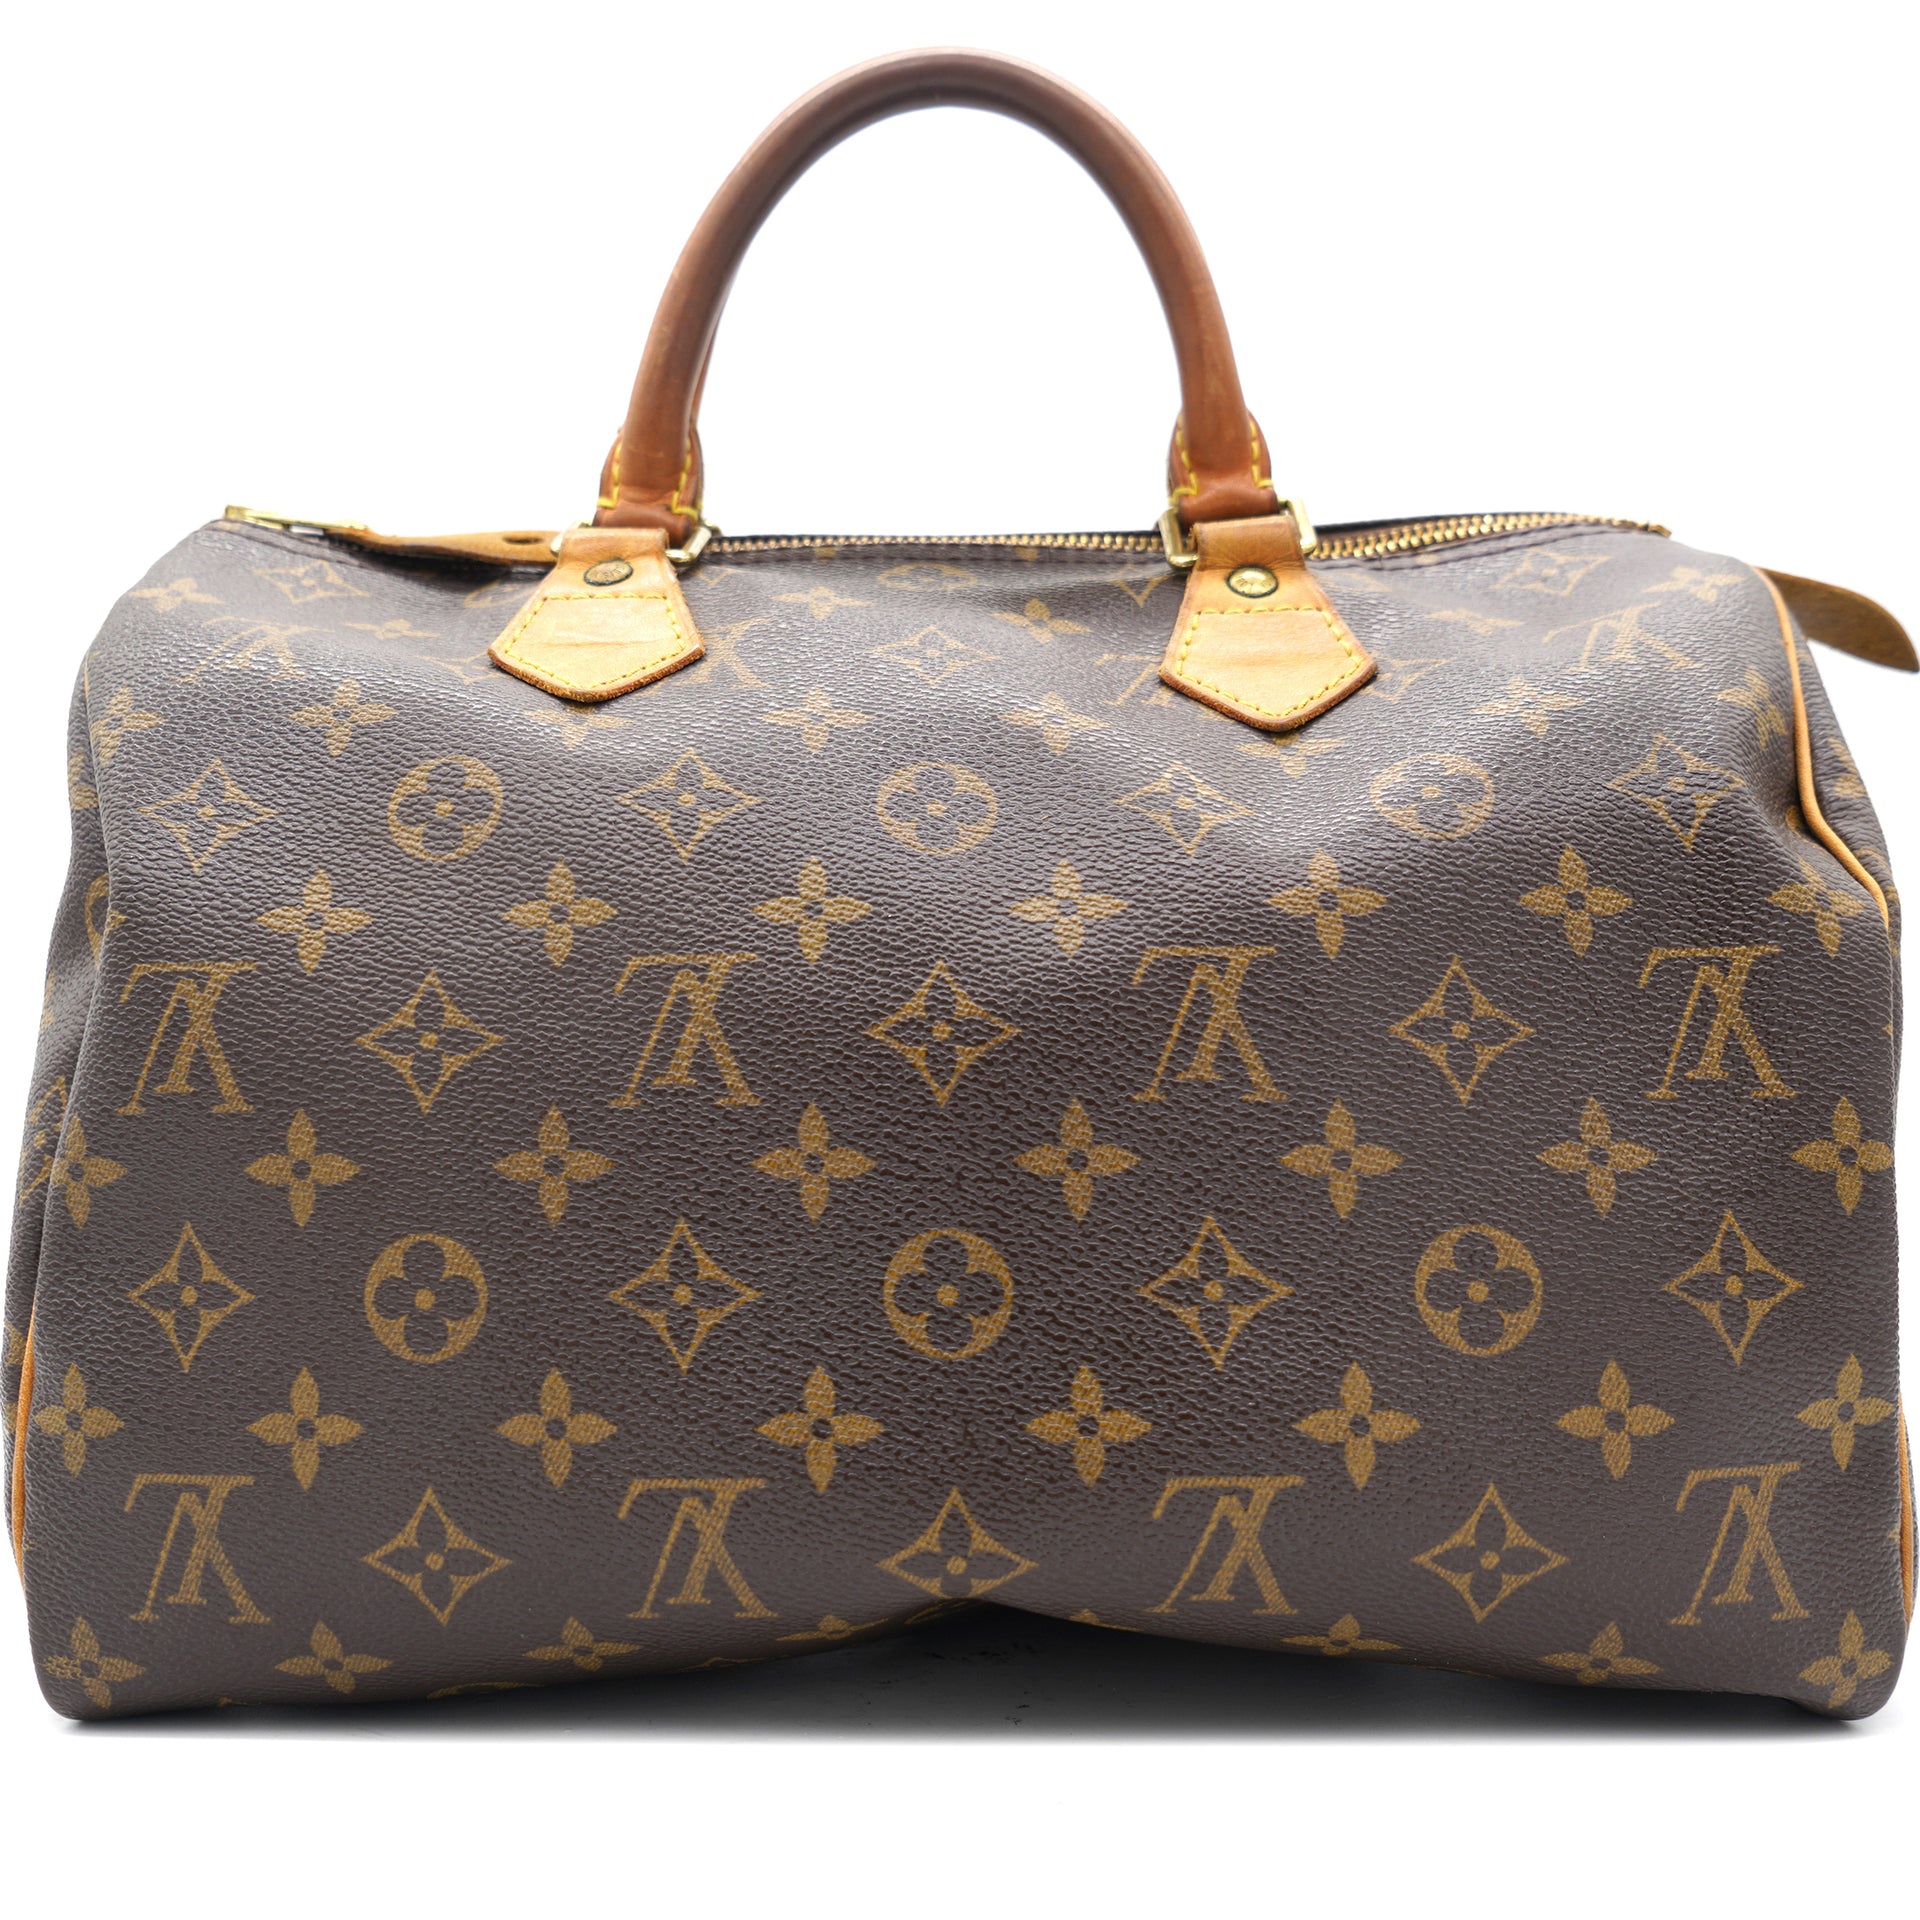 Vintage Louis Vuitton malesherbes monogram tote bag with top